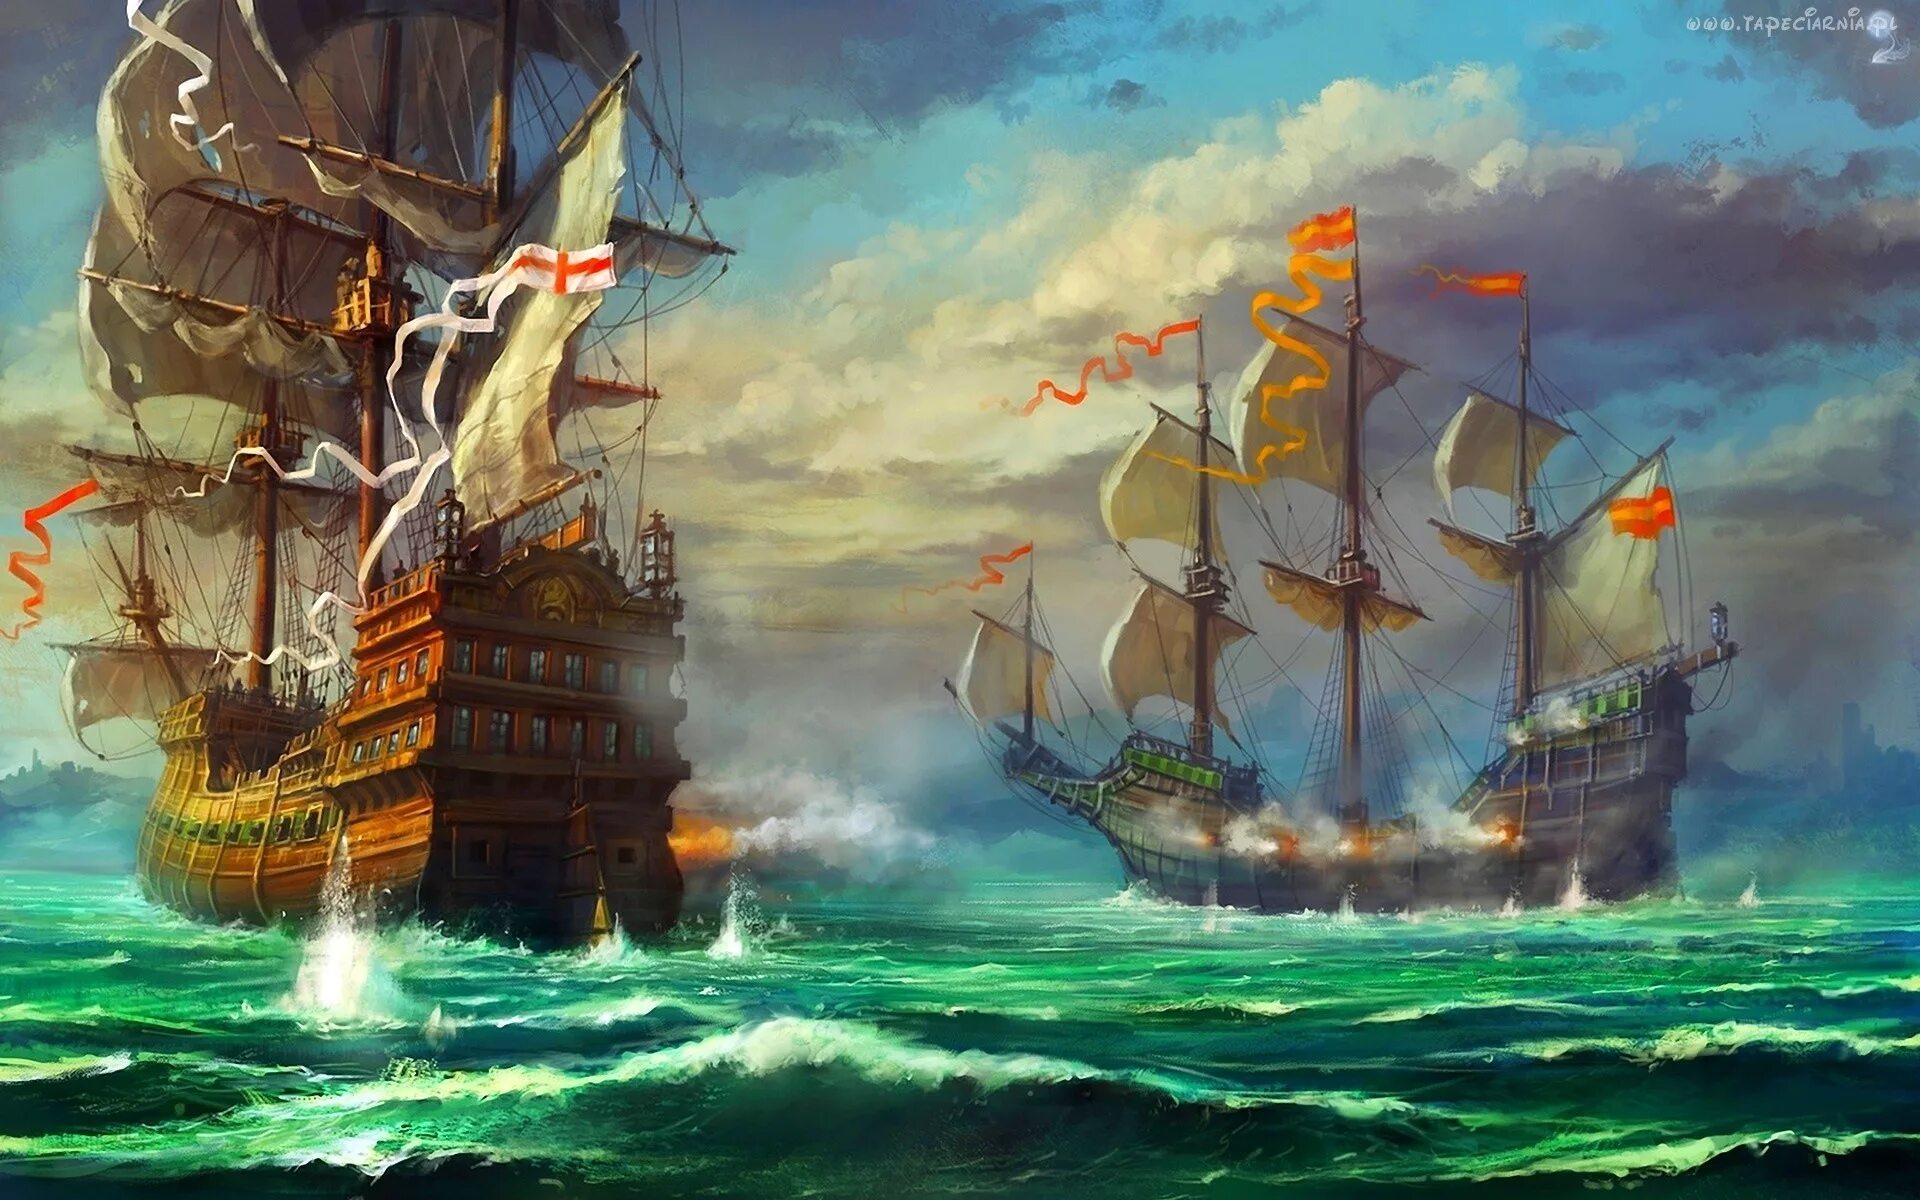 1700 1600 1200. Пиратский Галеон сражение. Корабли битвы - эпоха пиратов - пират корабль Галеон. Морские баталии художник Абрахам Хантер.